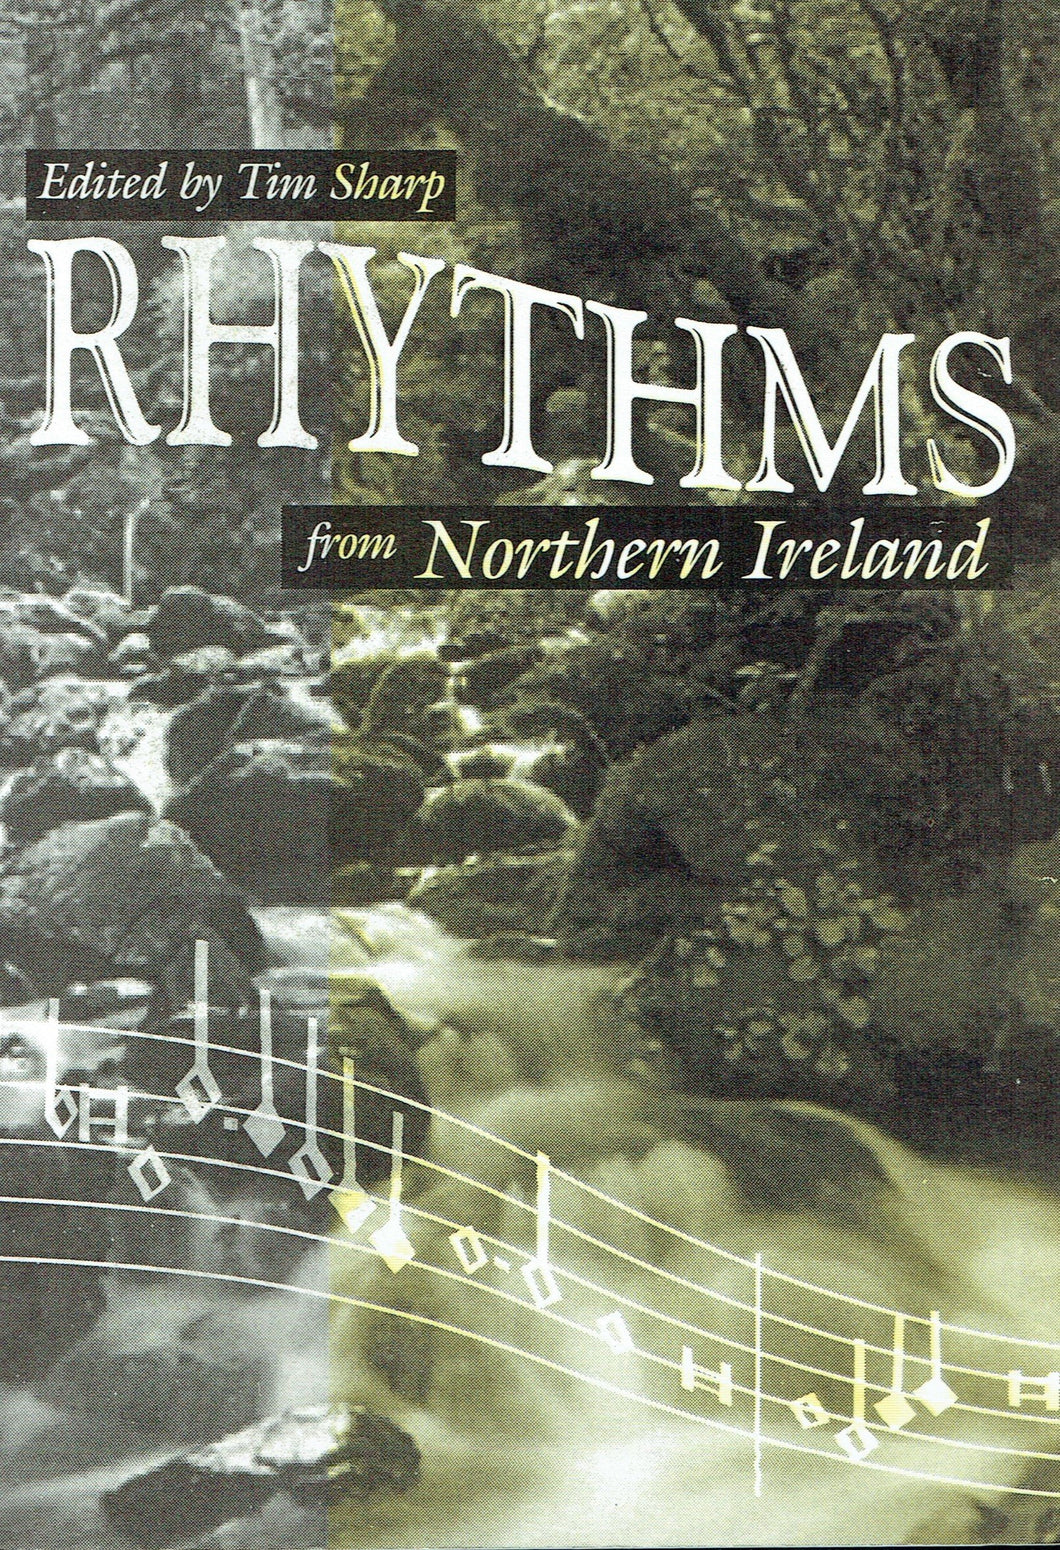 Rhythms from Northern Ireland